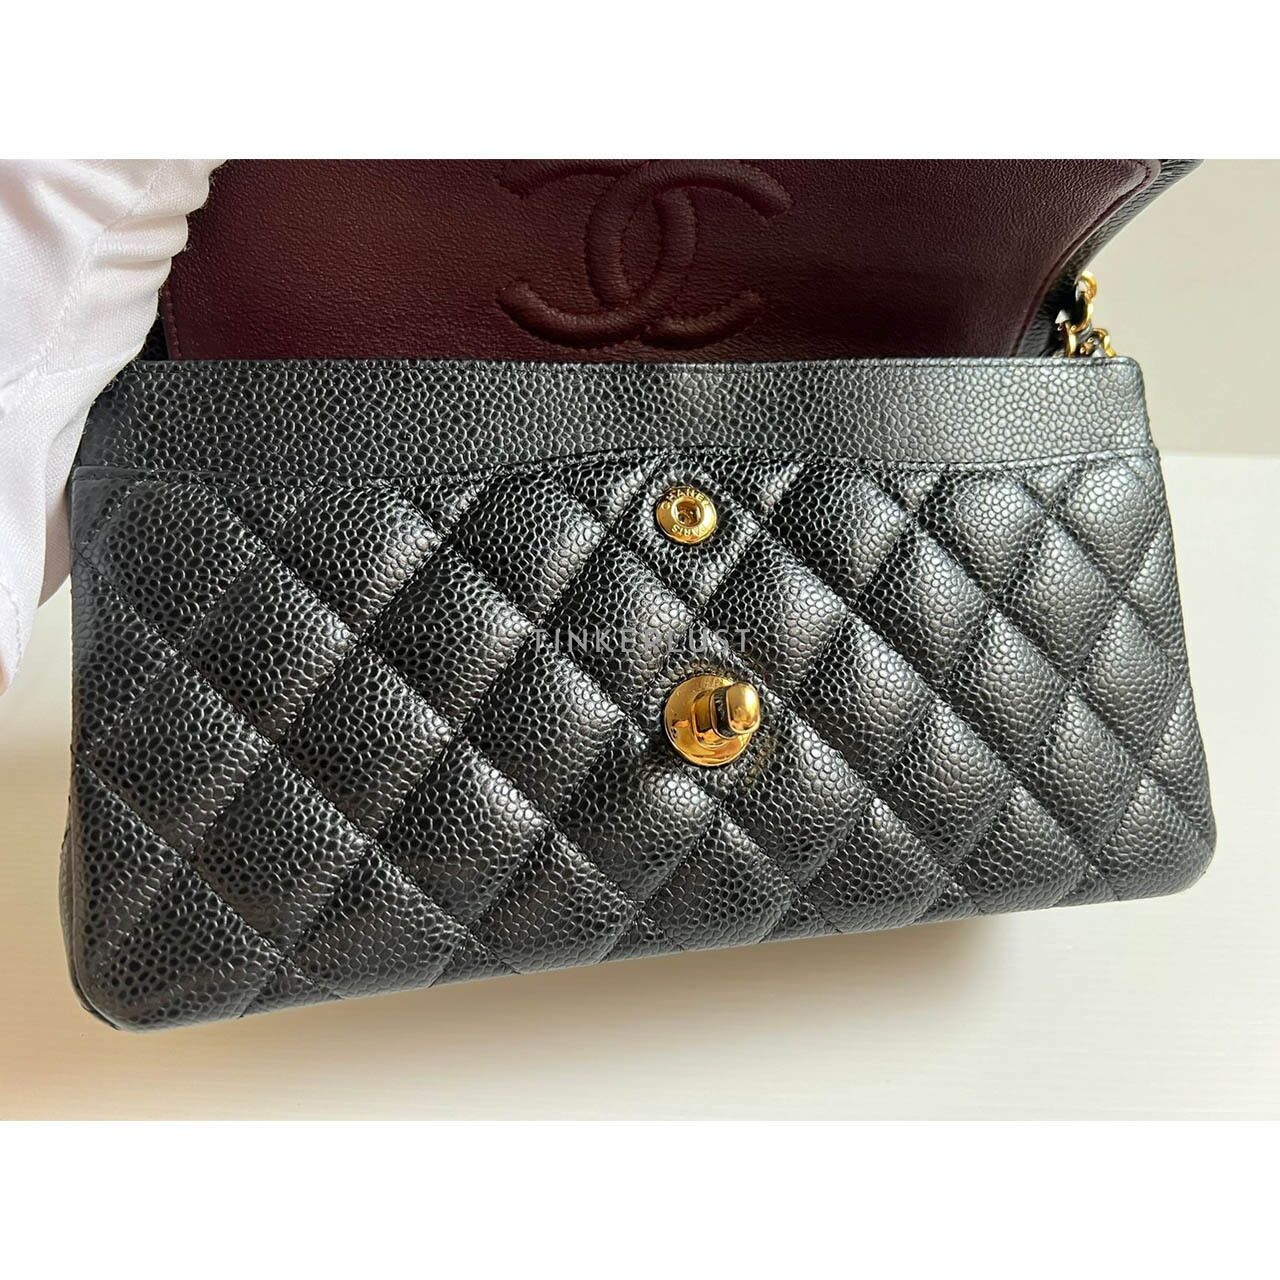 Chanel Classic Small Black Caviar GHW #28 Shoulder Bag